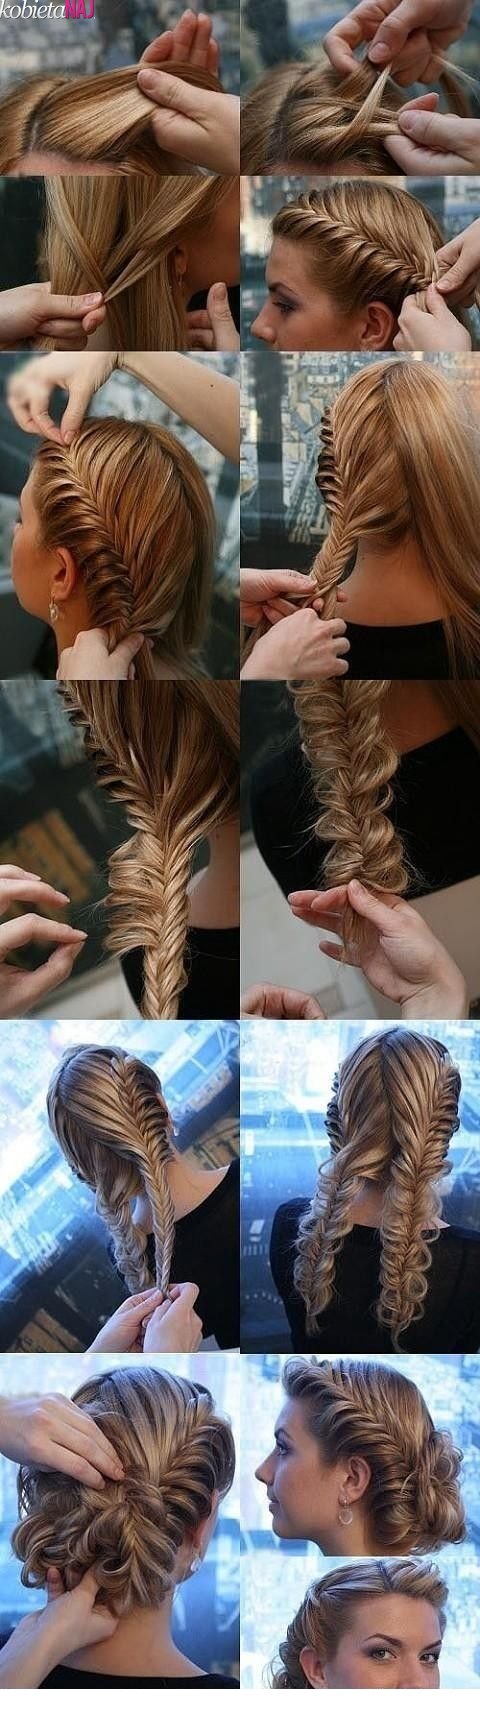 Adorable hairstyle tutorials: beautiful fishtail braids